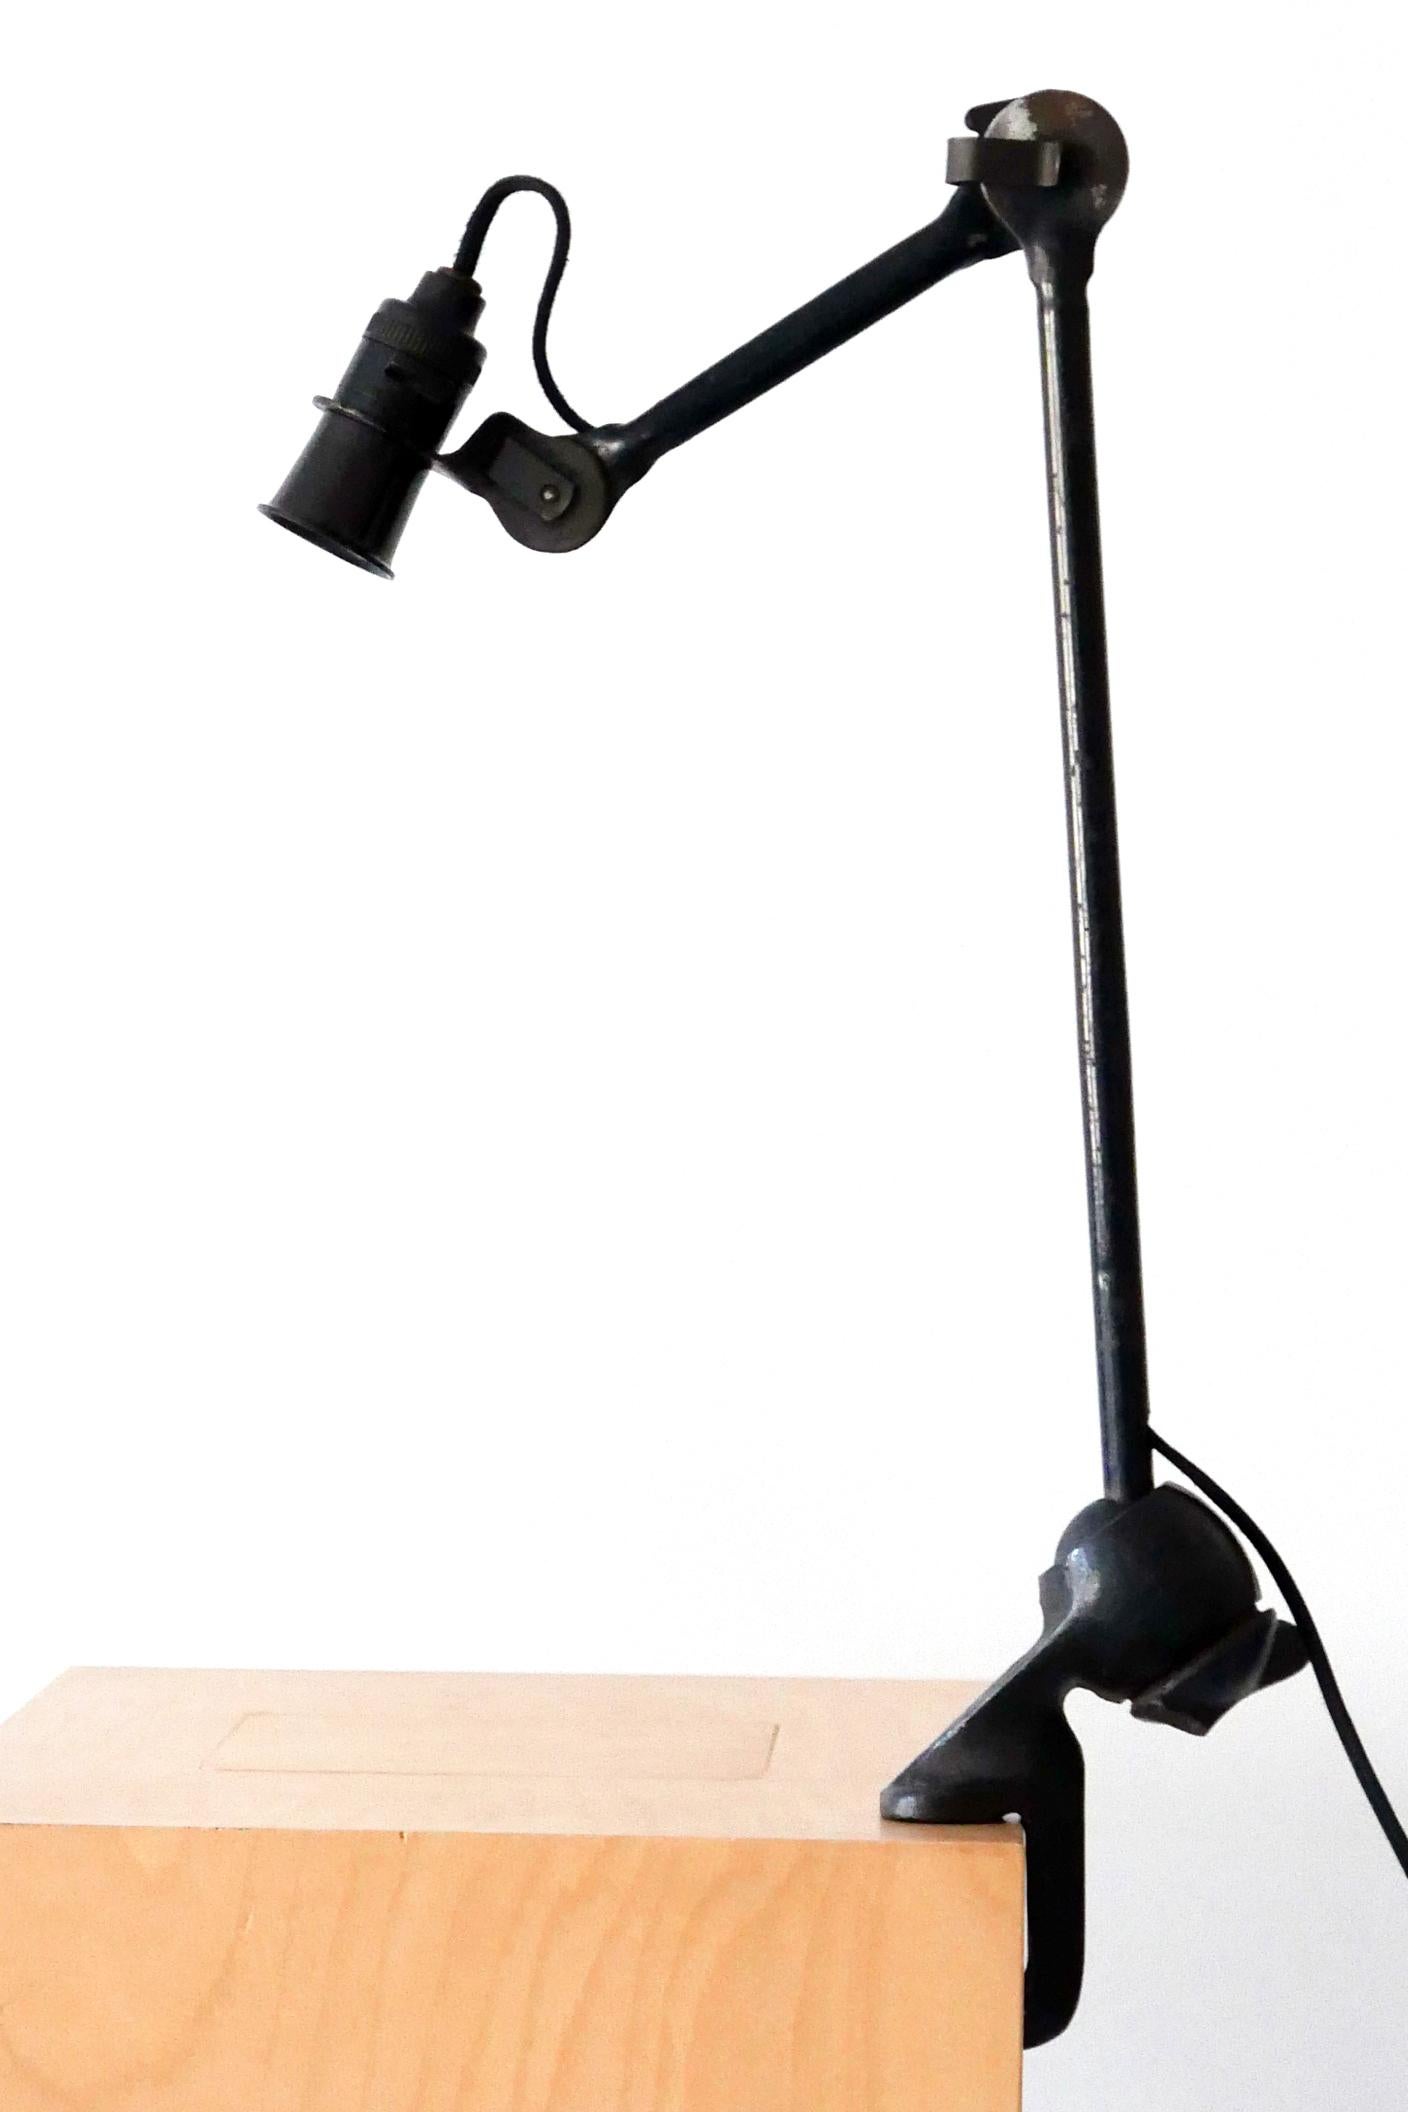 French Modernist Task Light or Clamp Table Lamp by Bernard-Albin Gras for Gras, 1920s For Sale